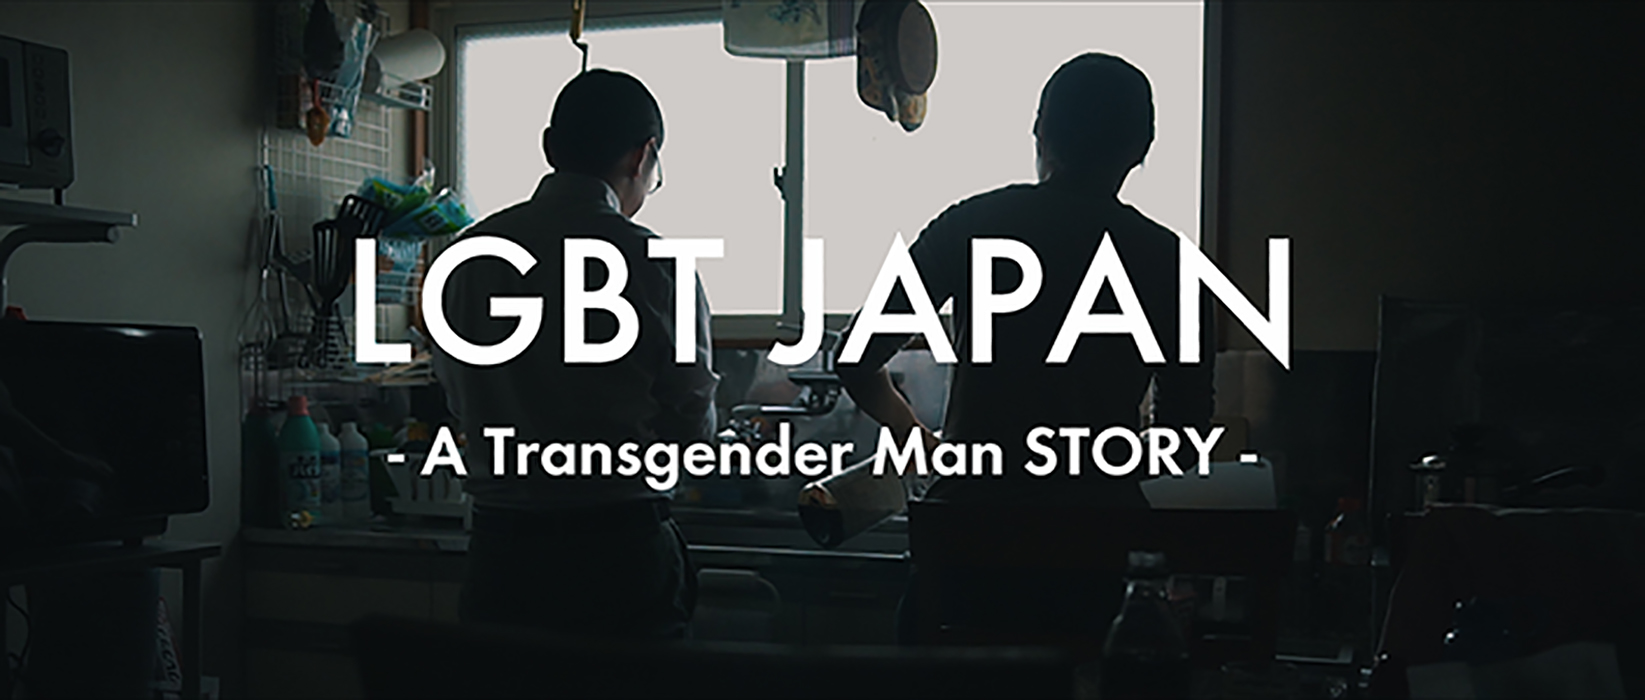 LGBT JAPAN A Transgender Man Story